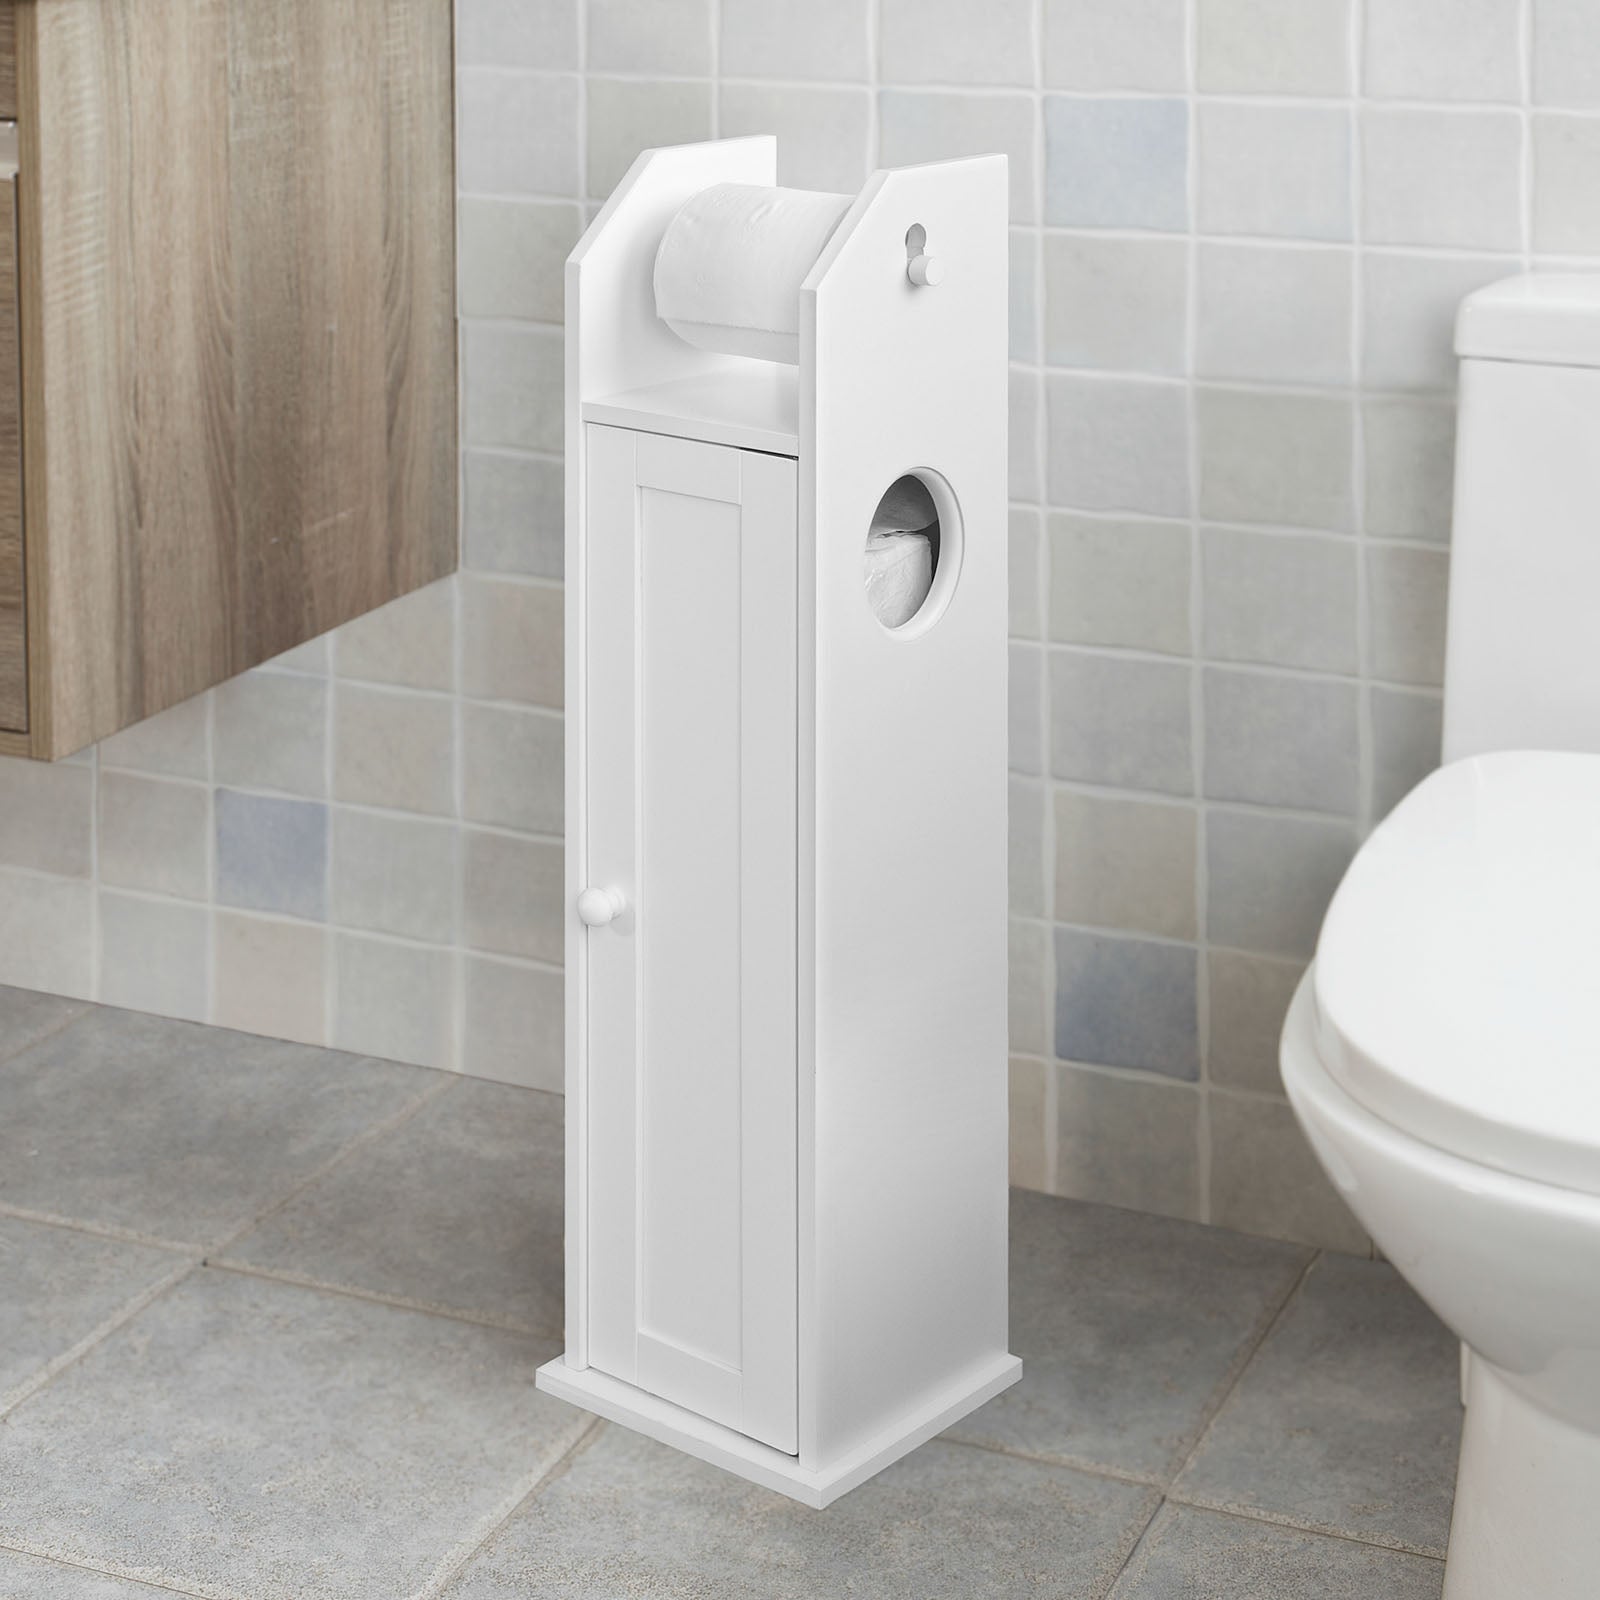 White Wood Free Standing Toilet Paper Roll Holder Bathroom Storage